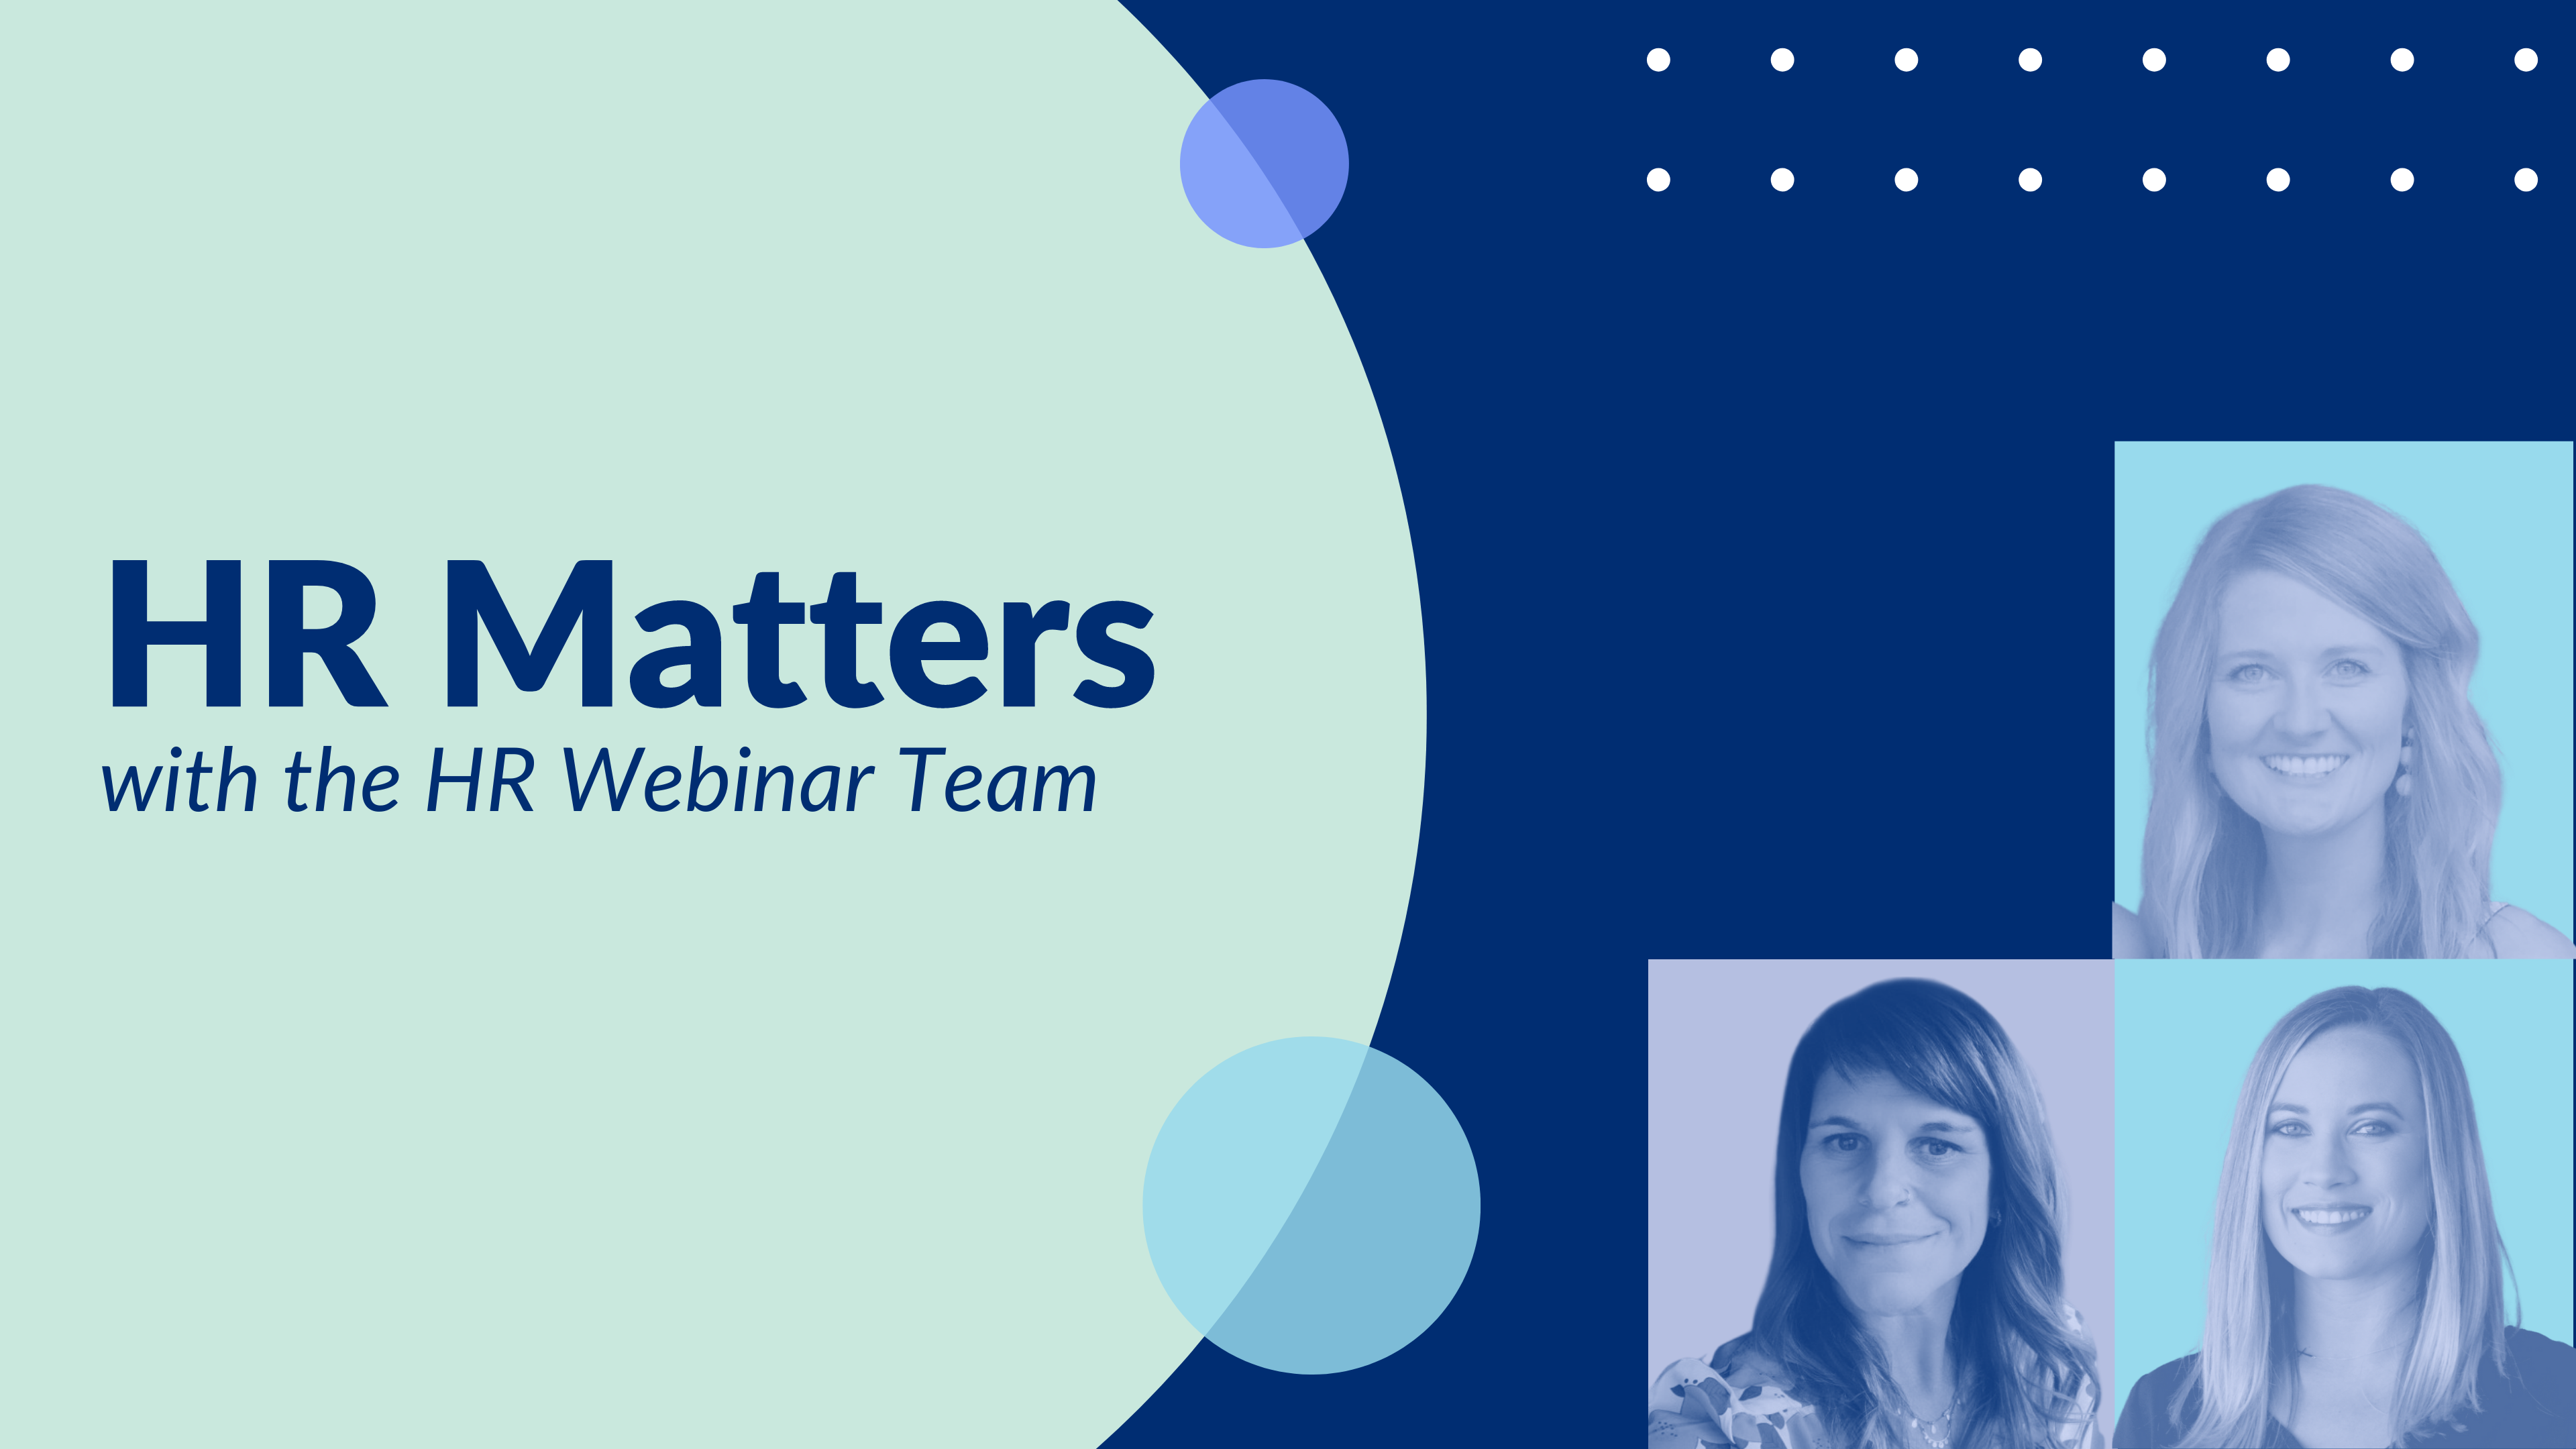 HR Matters with the HR Webinar Team